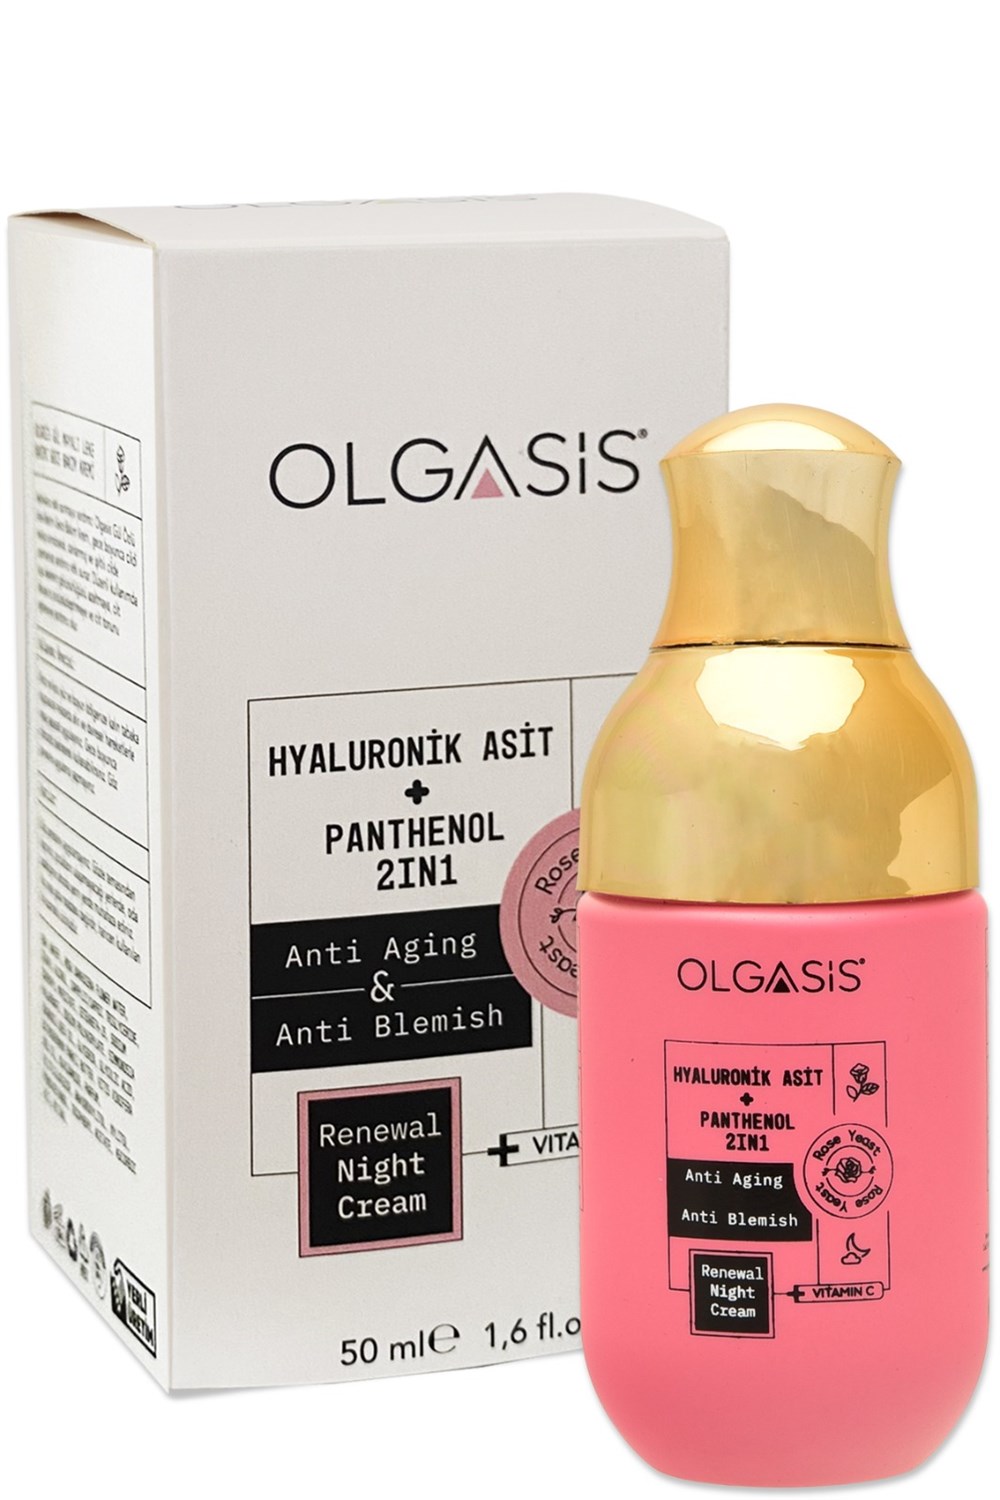 Olgasis Hyaluronik Asit + Panthenol 2IN1 Rose Extract Renewal Nıght Cream  50 Ml Gül Mayalı Gece Bakım Kremi